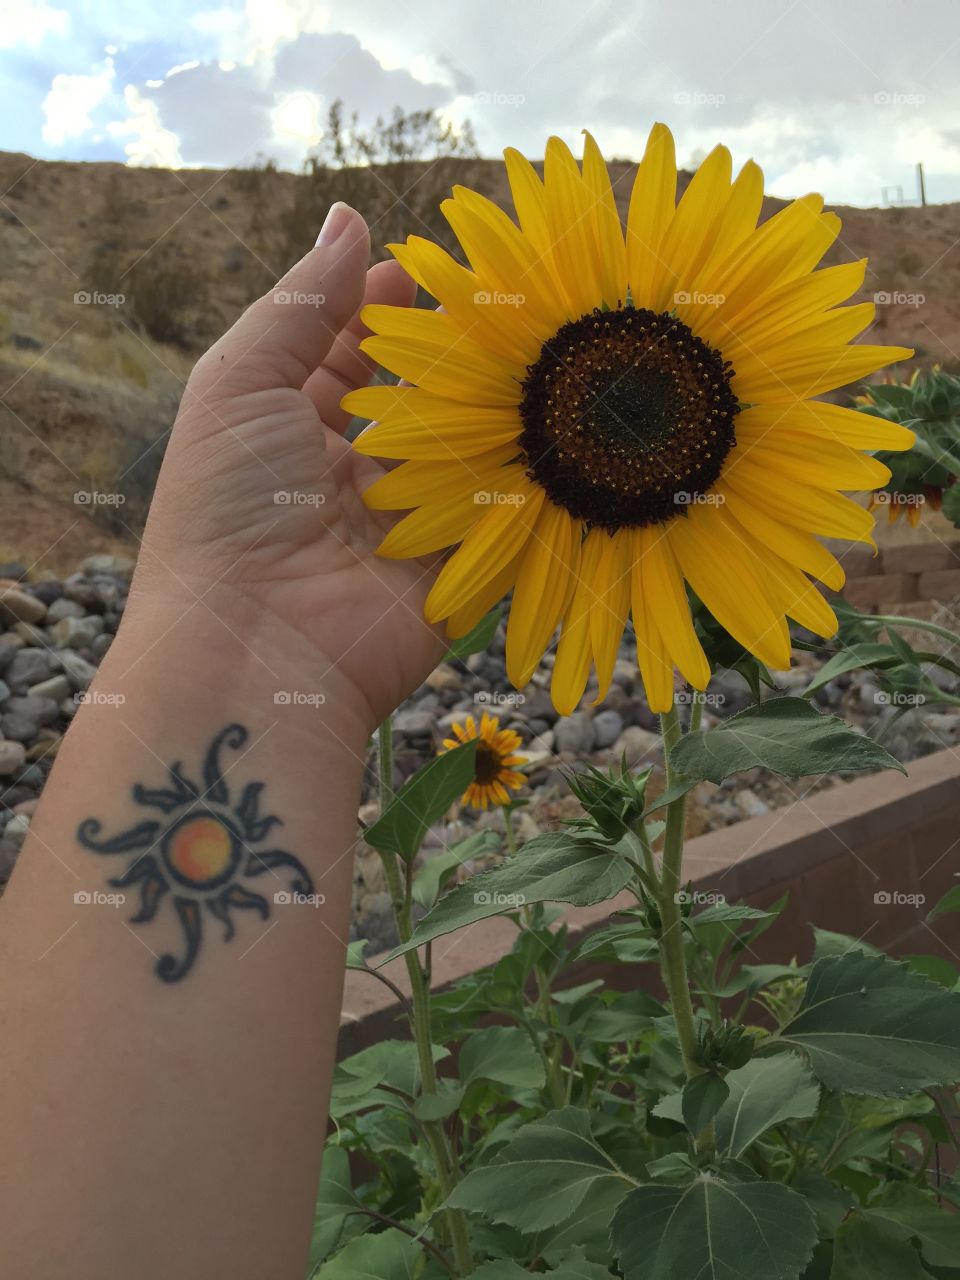 Sunflower love.